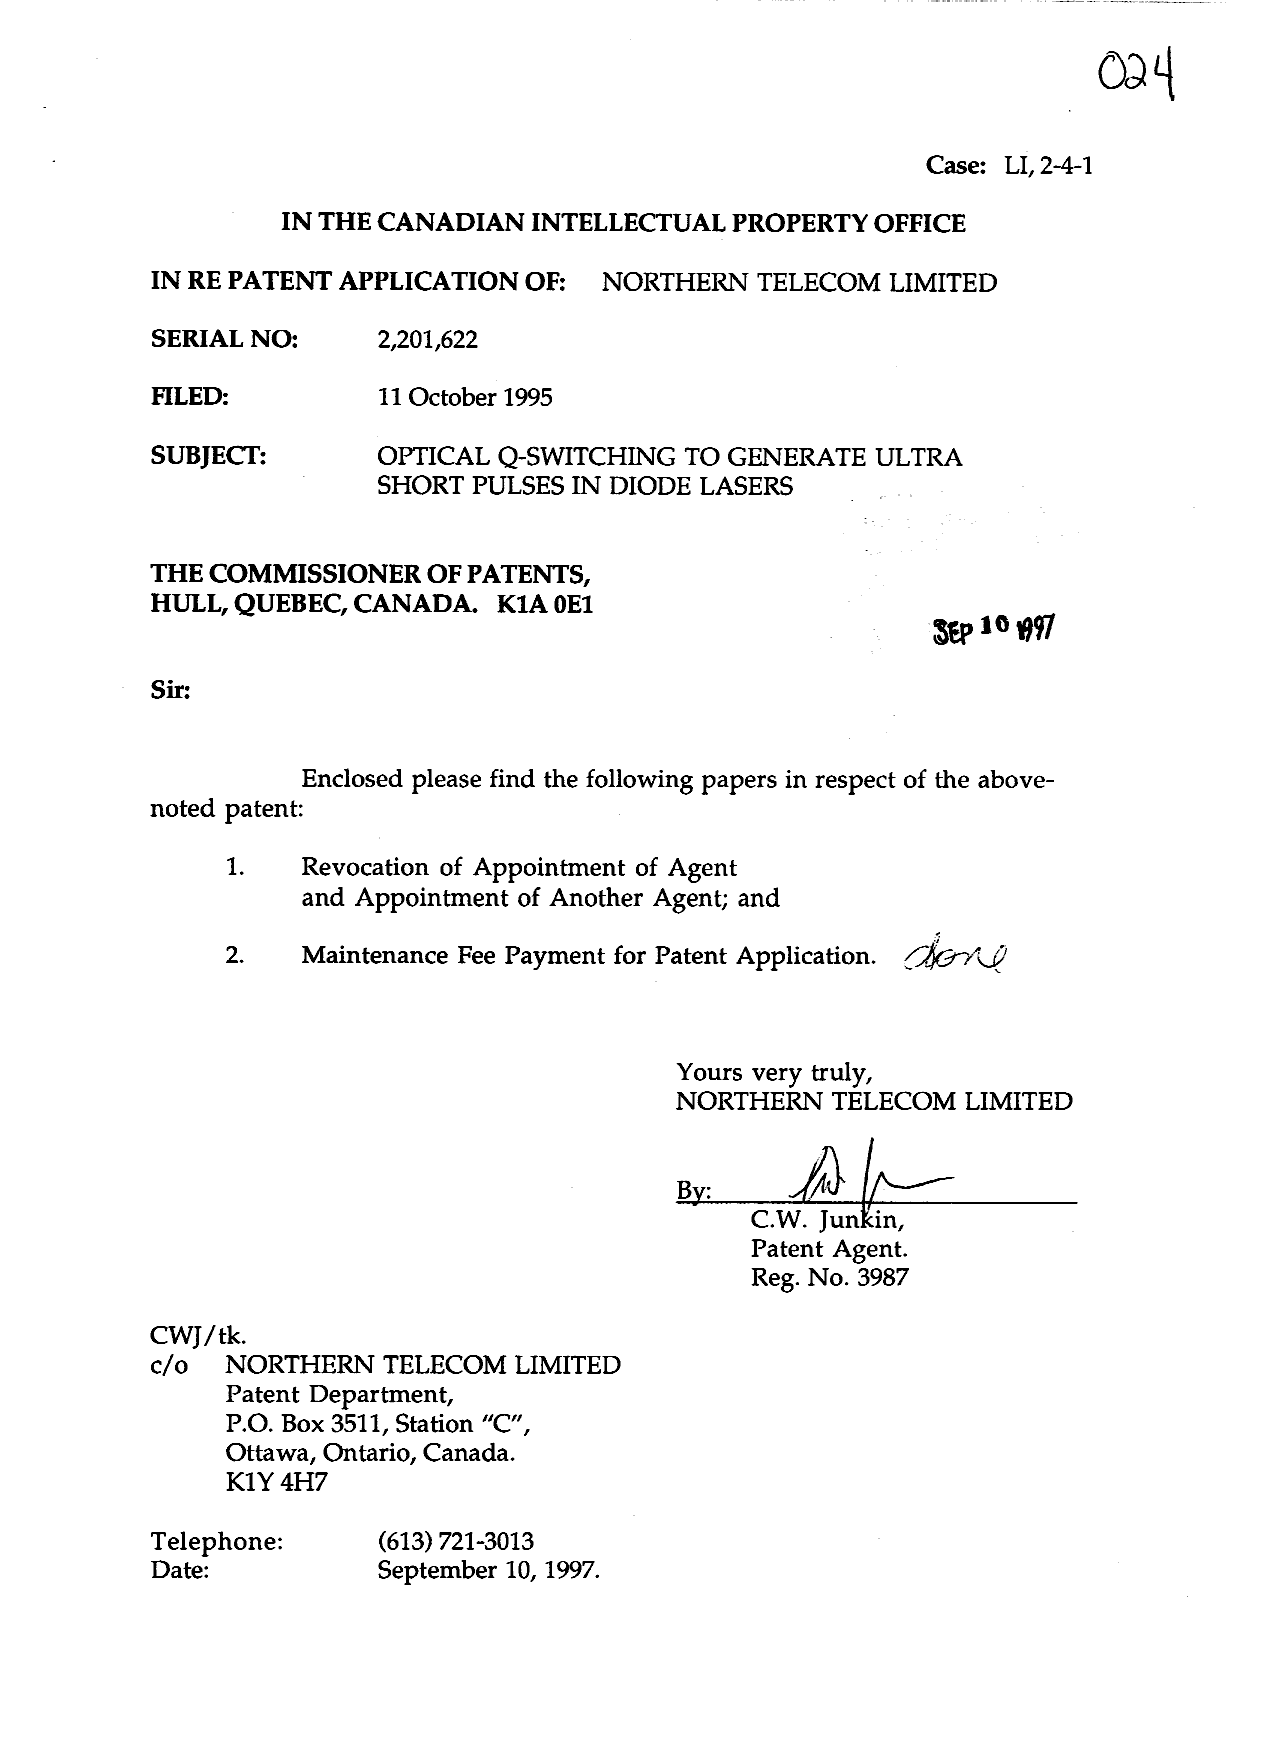 Canadian Patent Document 2201622. Correspondence 19971023. Image 1 of 6